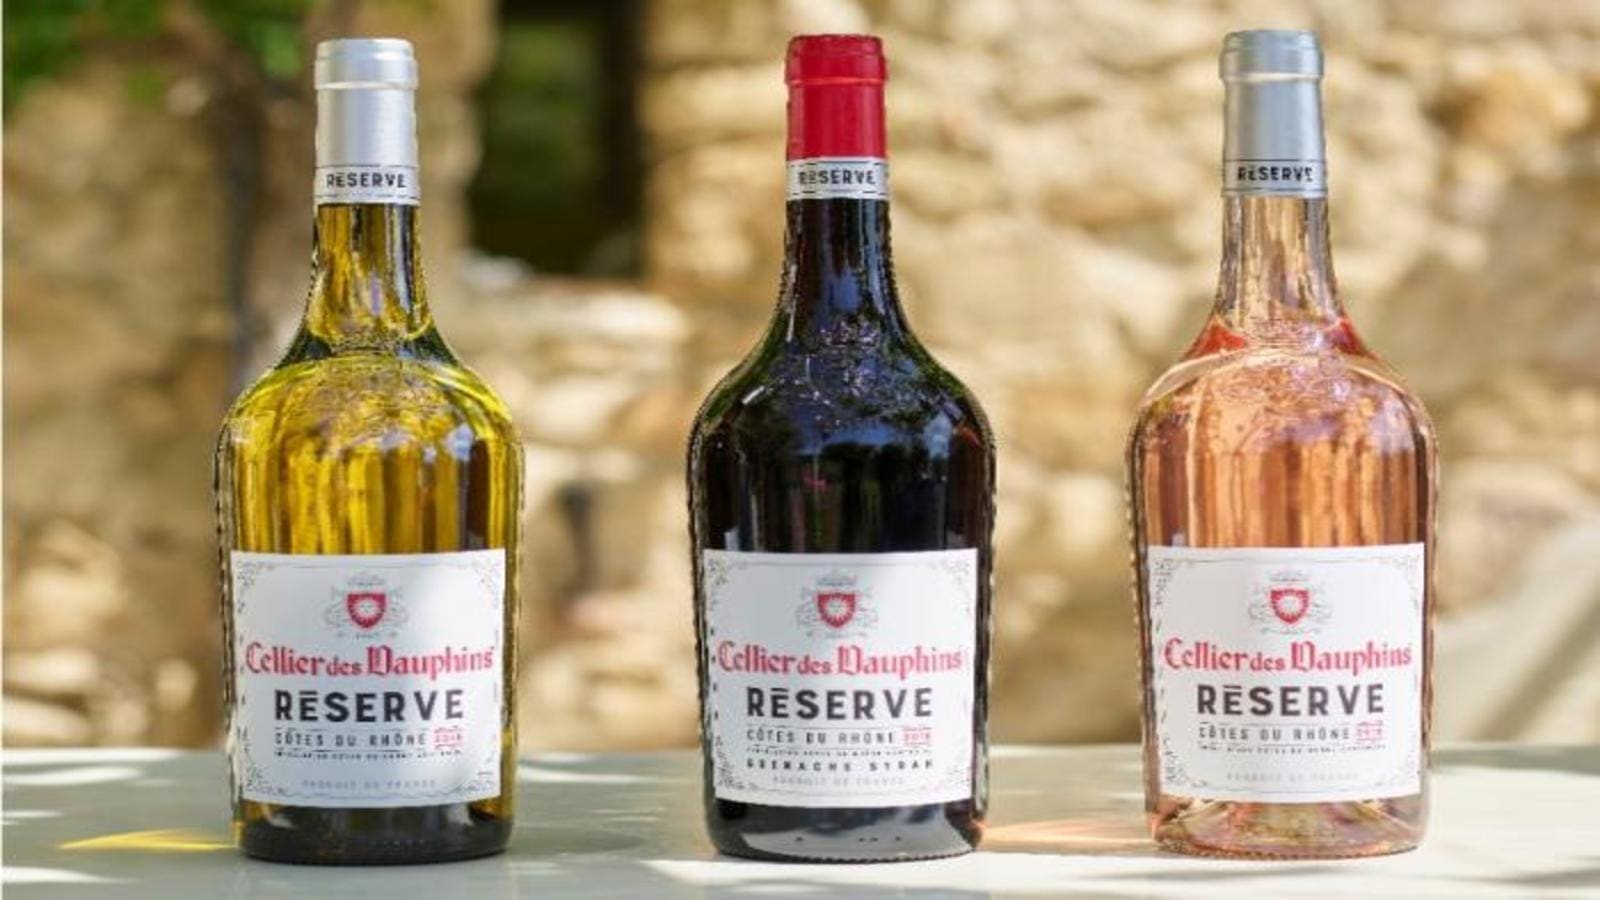 Leading producer of wines Cellier des Dauphins appoints Kingsland Drinks as distribution partner